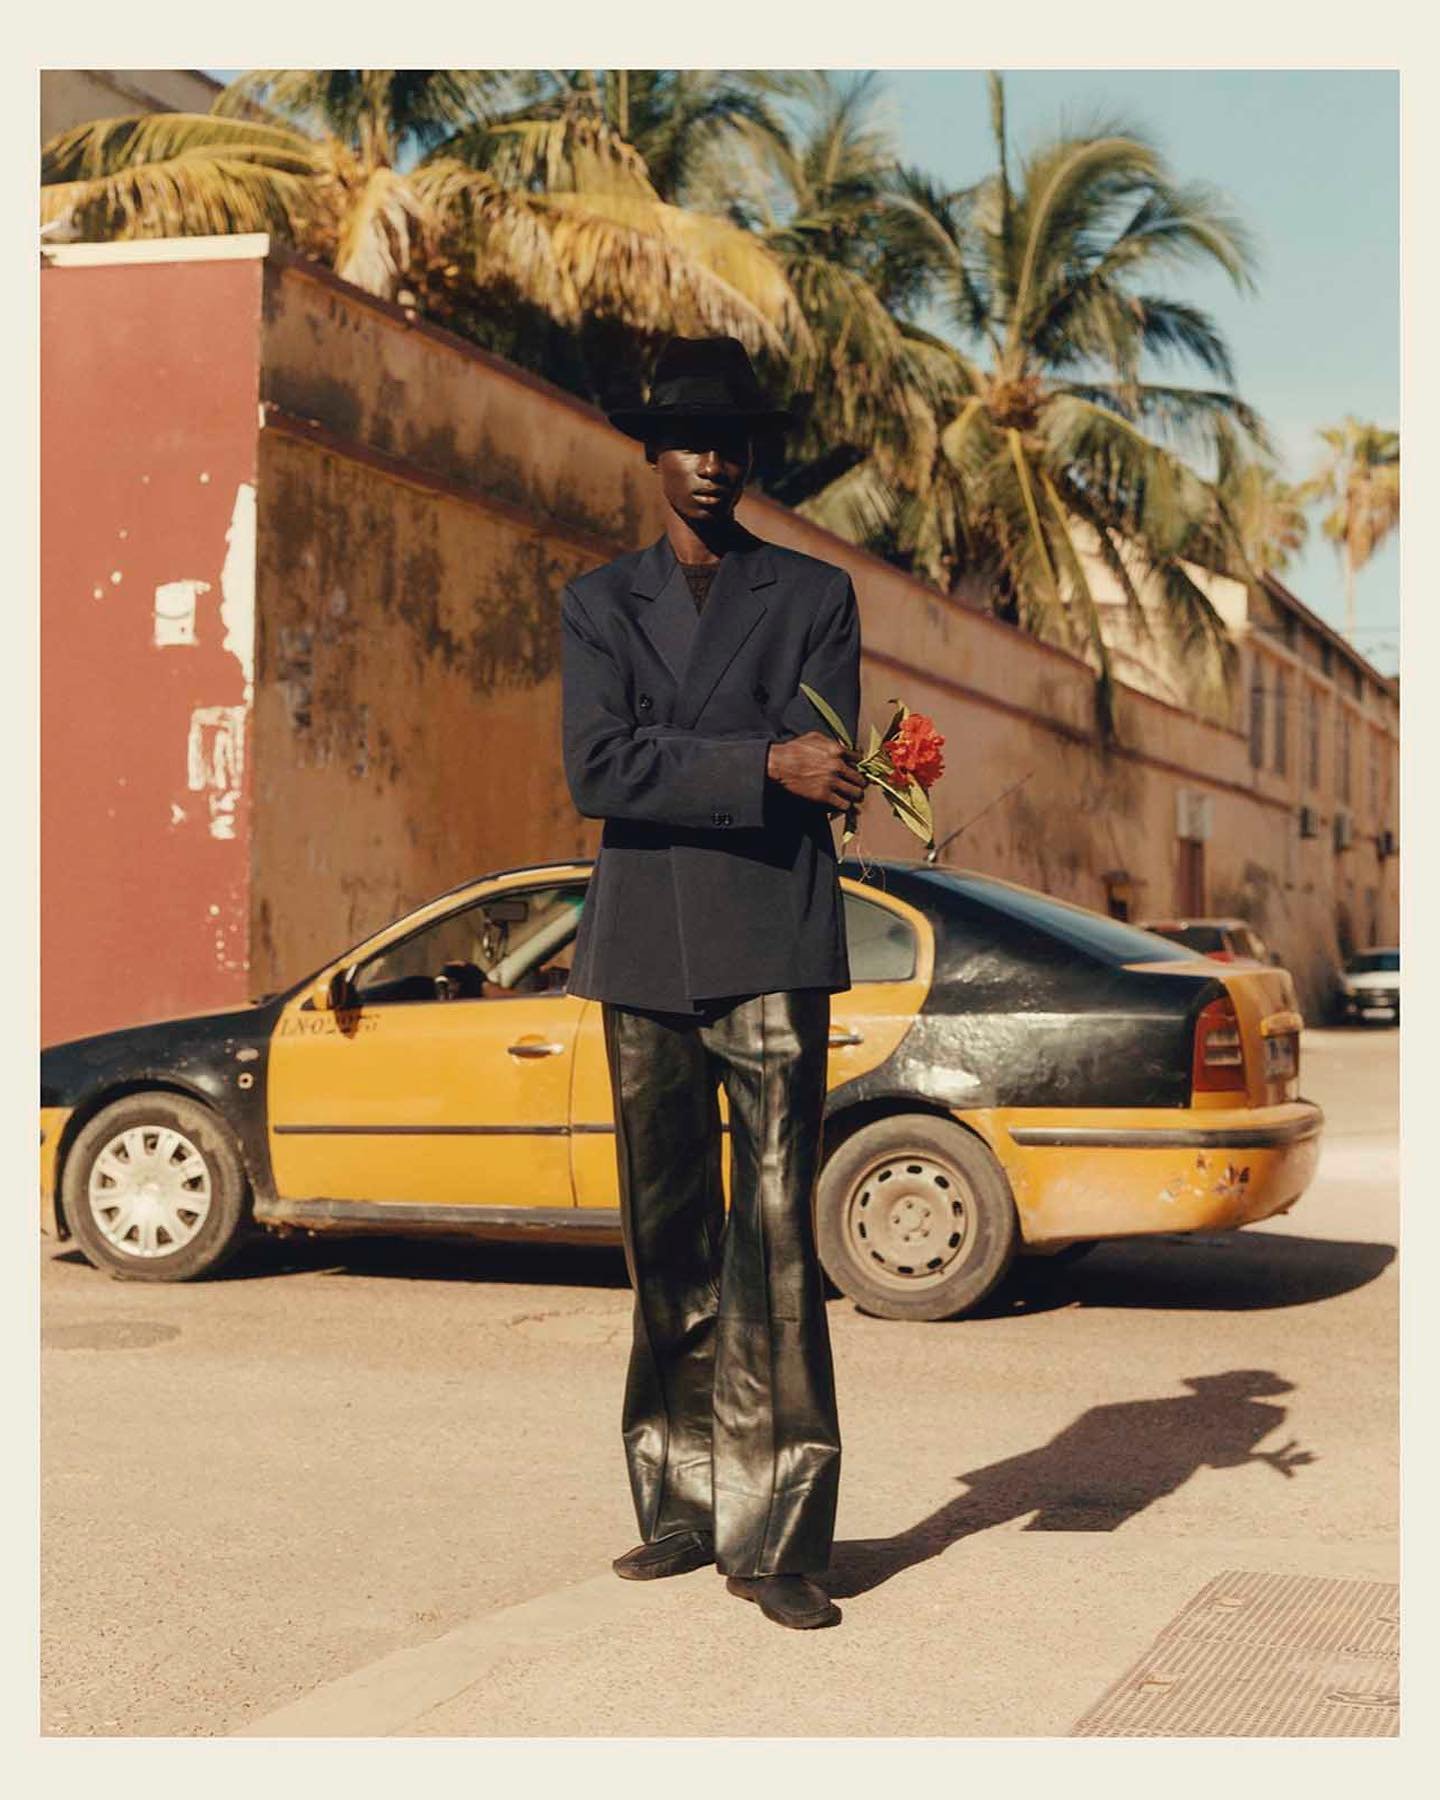 Quentin-De-Briey-in-Senegal-HTSI-Magazine-00009.jpg